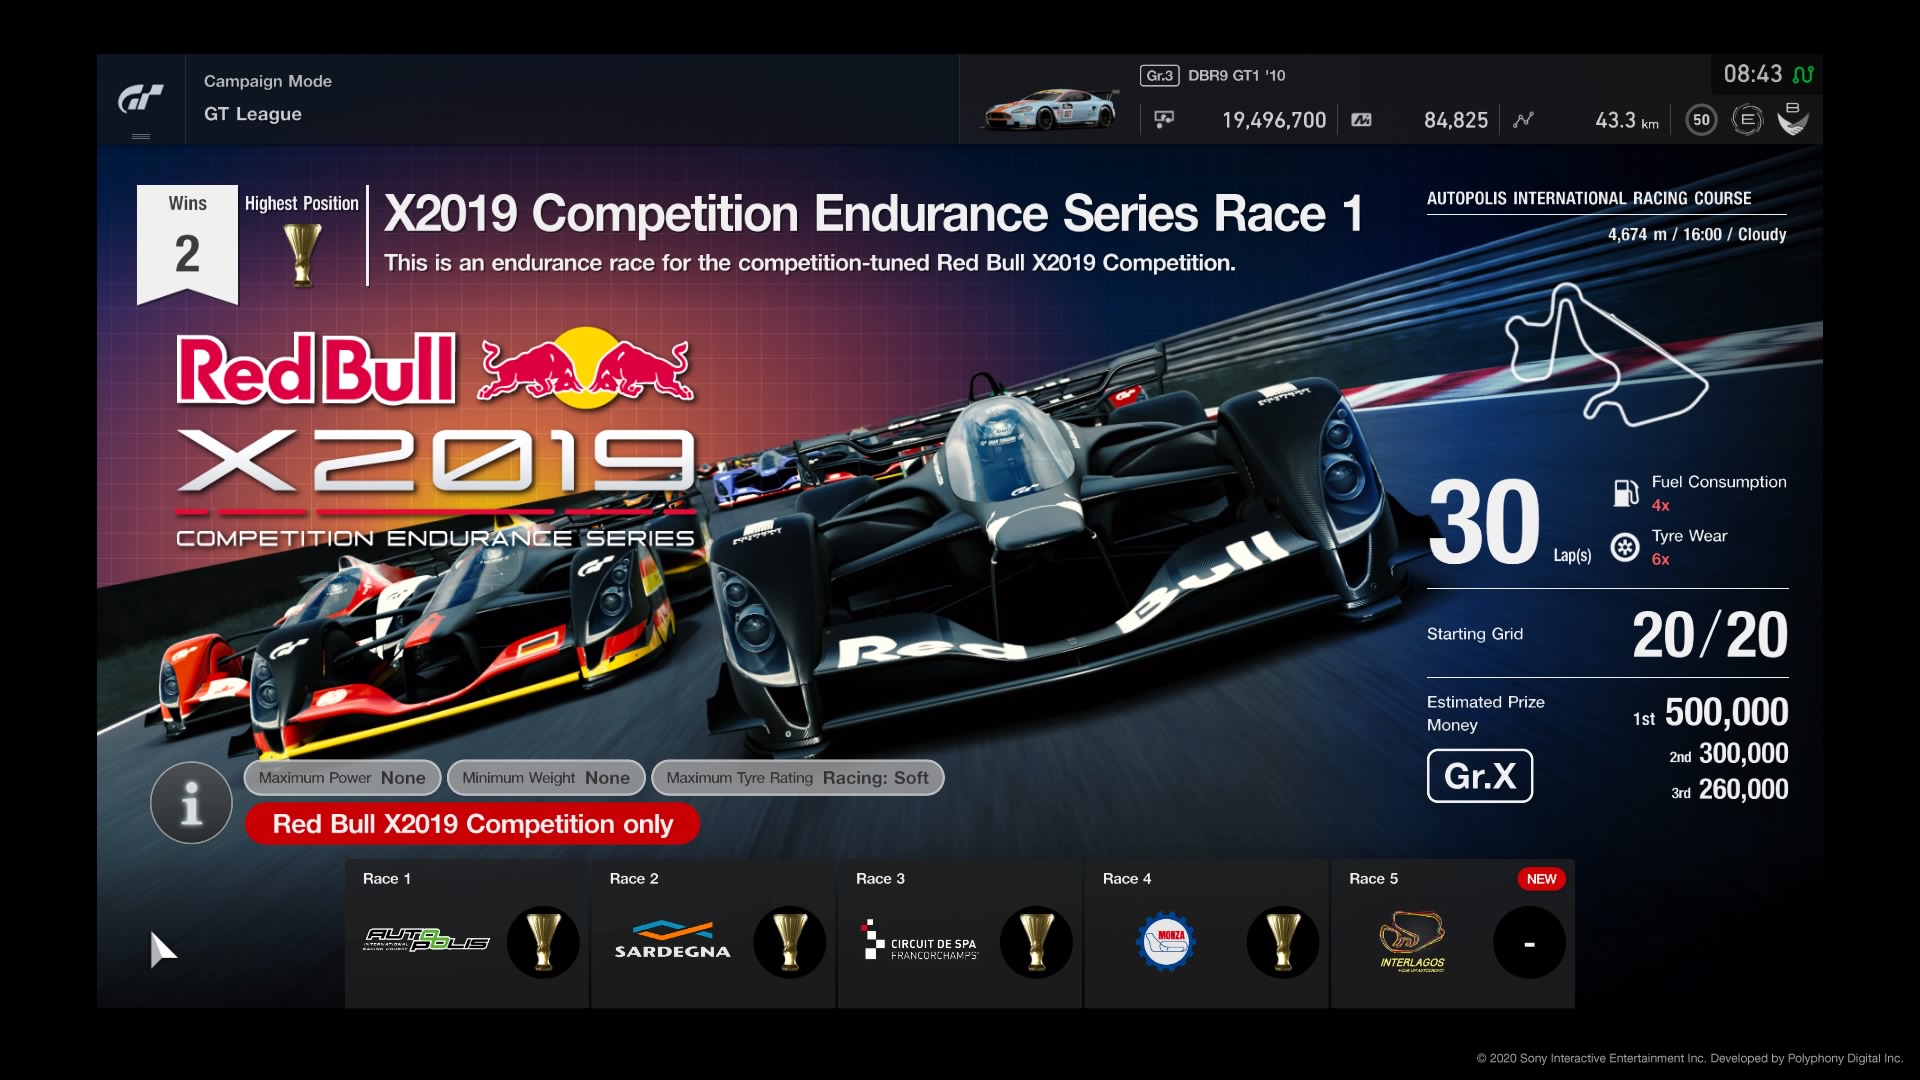 Competition Endurance Series | Gran Turismo Wiki | Fandom